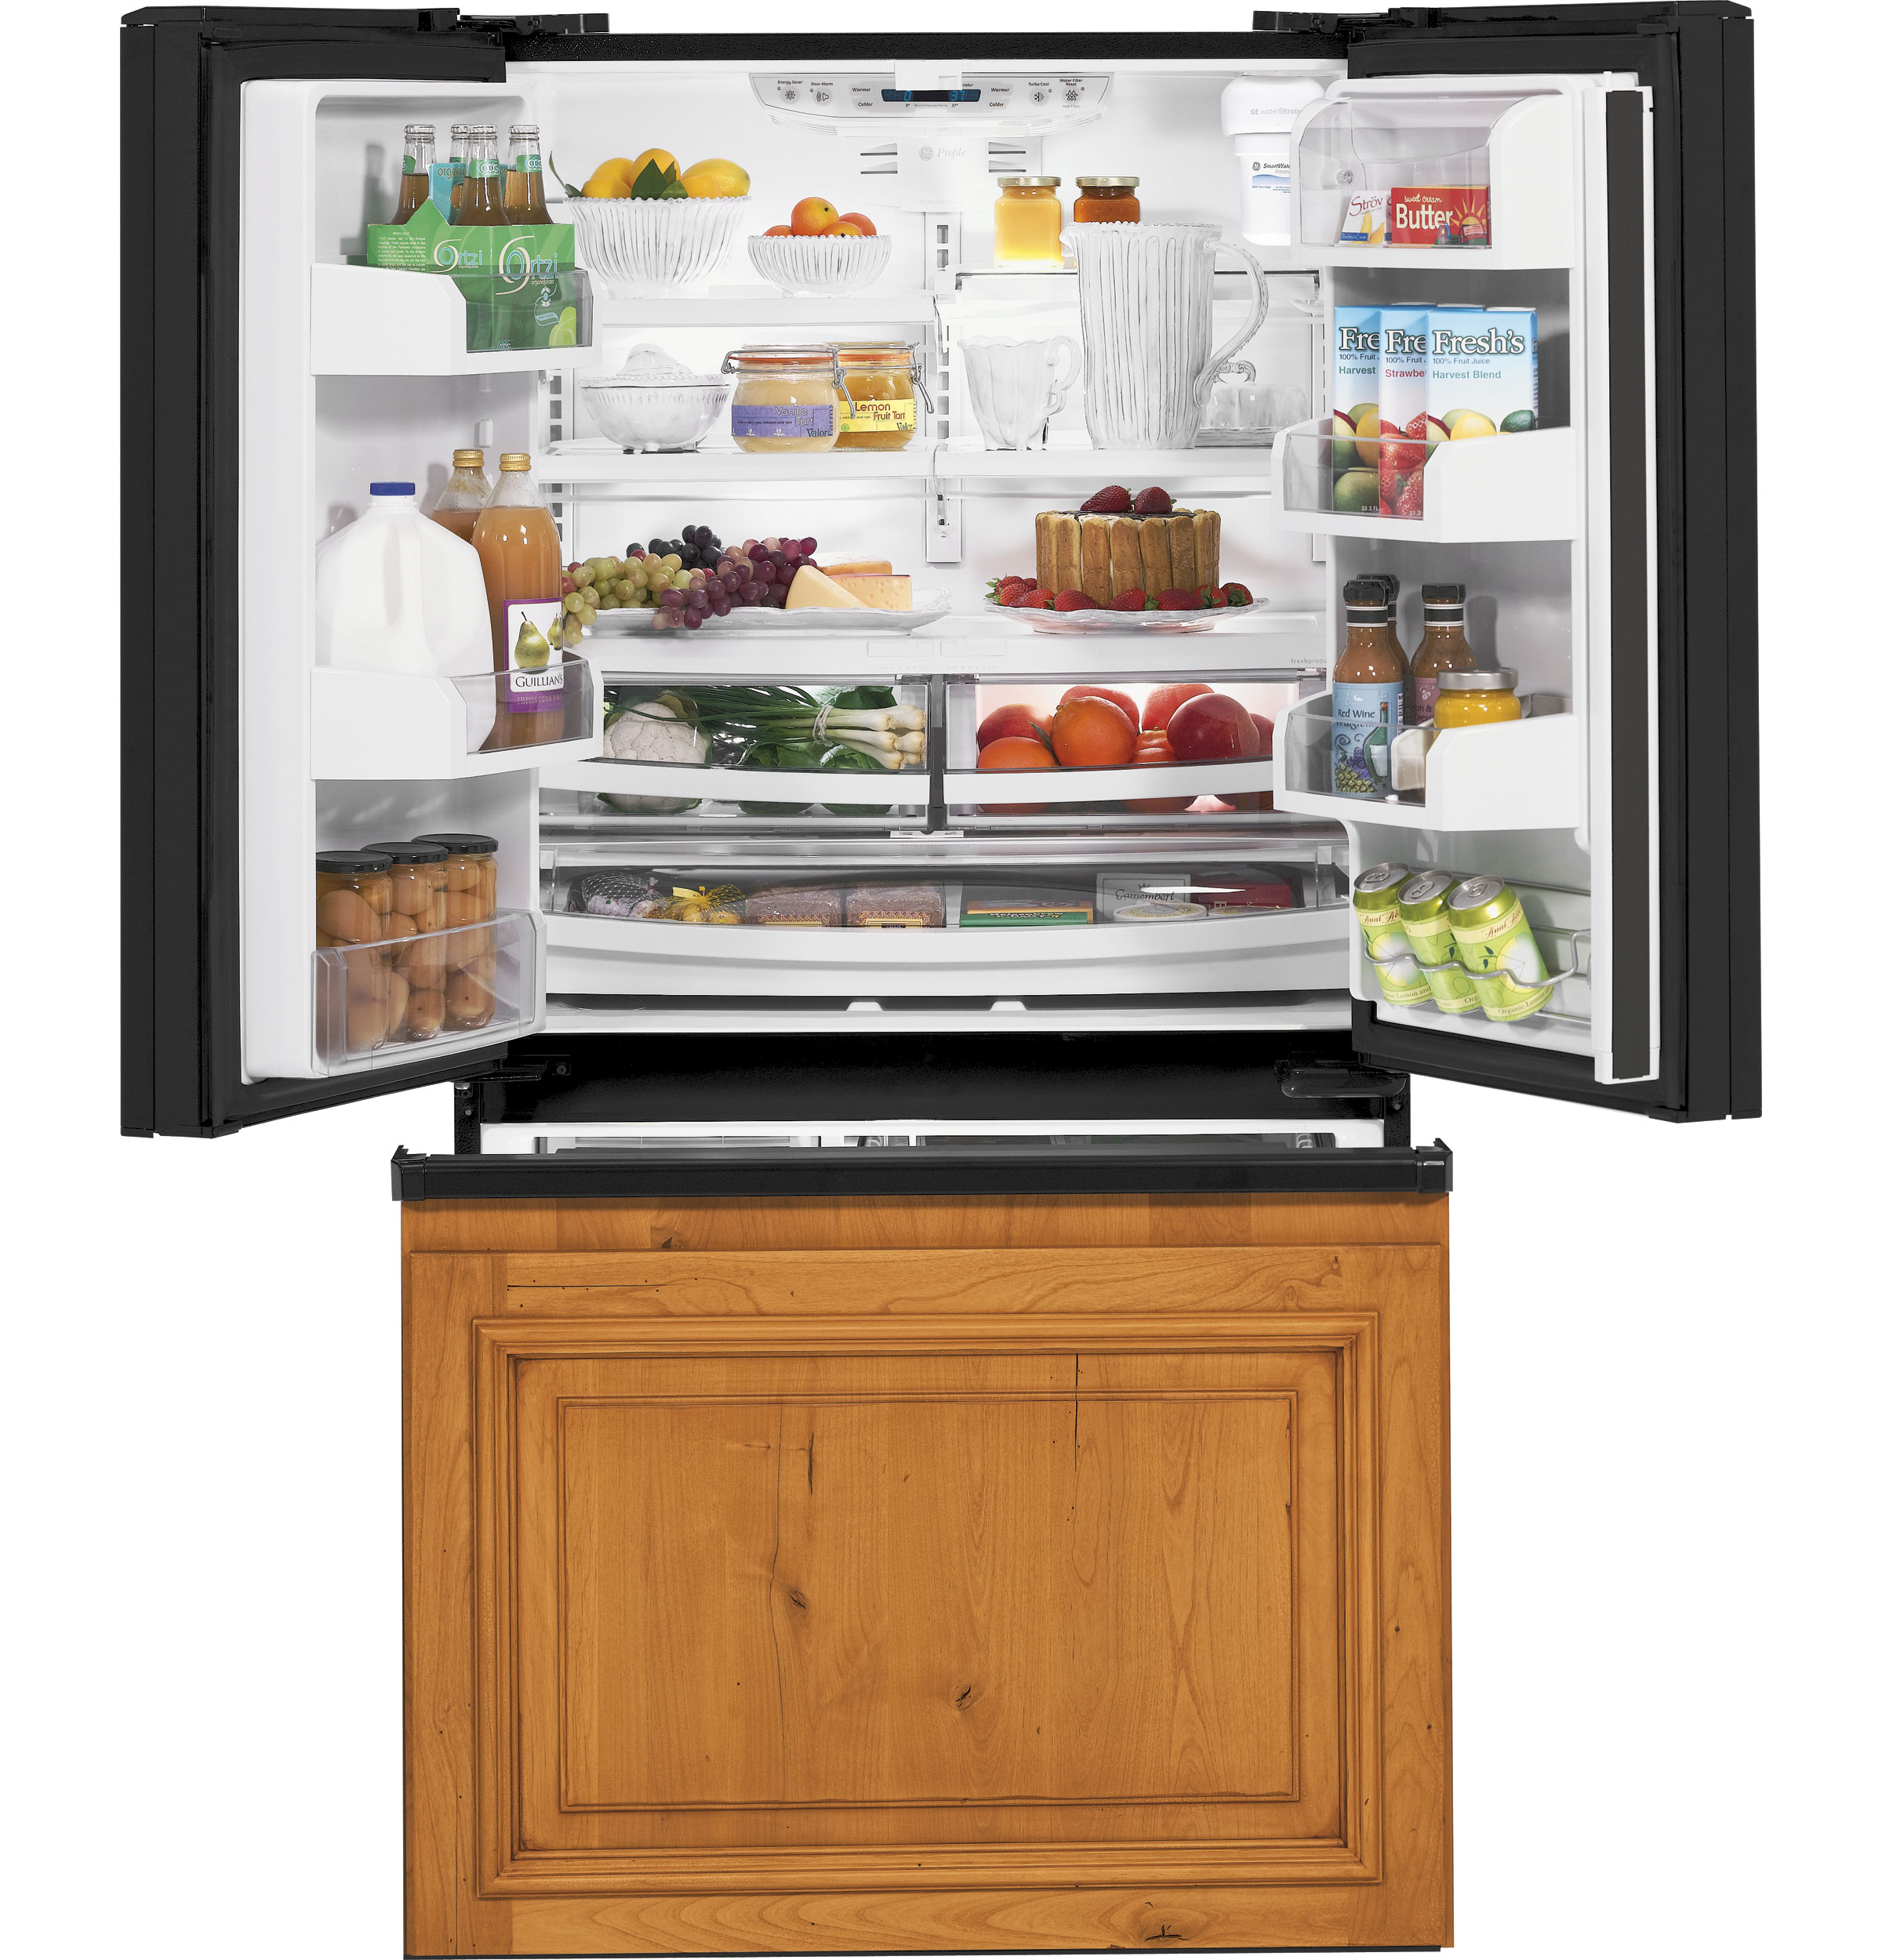 GE Profile™ 20.7 Cu. Ft. Counter-Depth French-Door Refrigerator